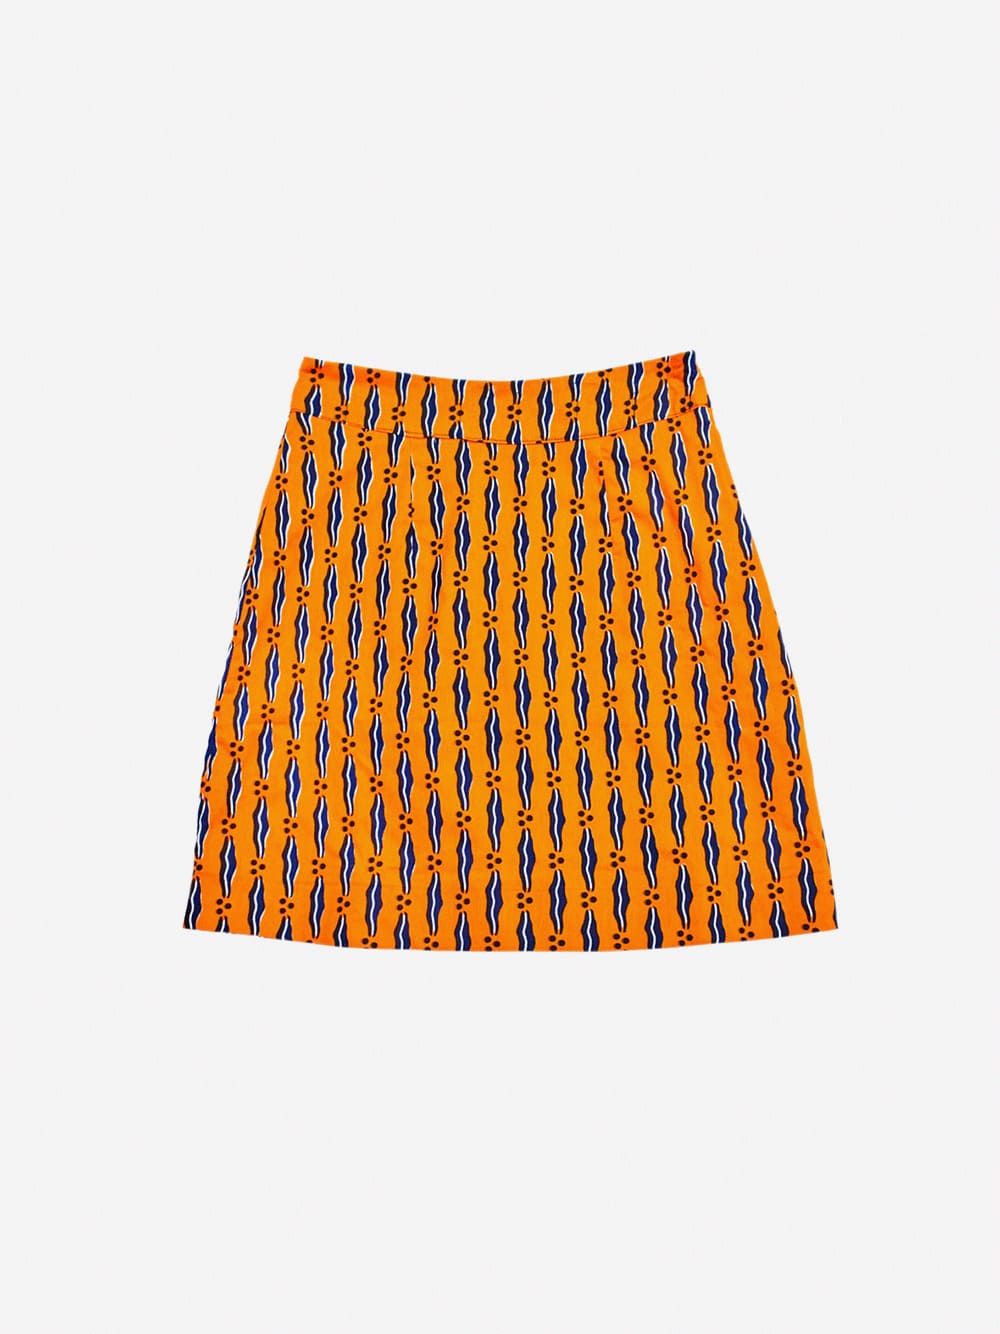 Douce Vague Orange Skirt | Fou